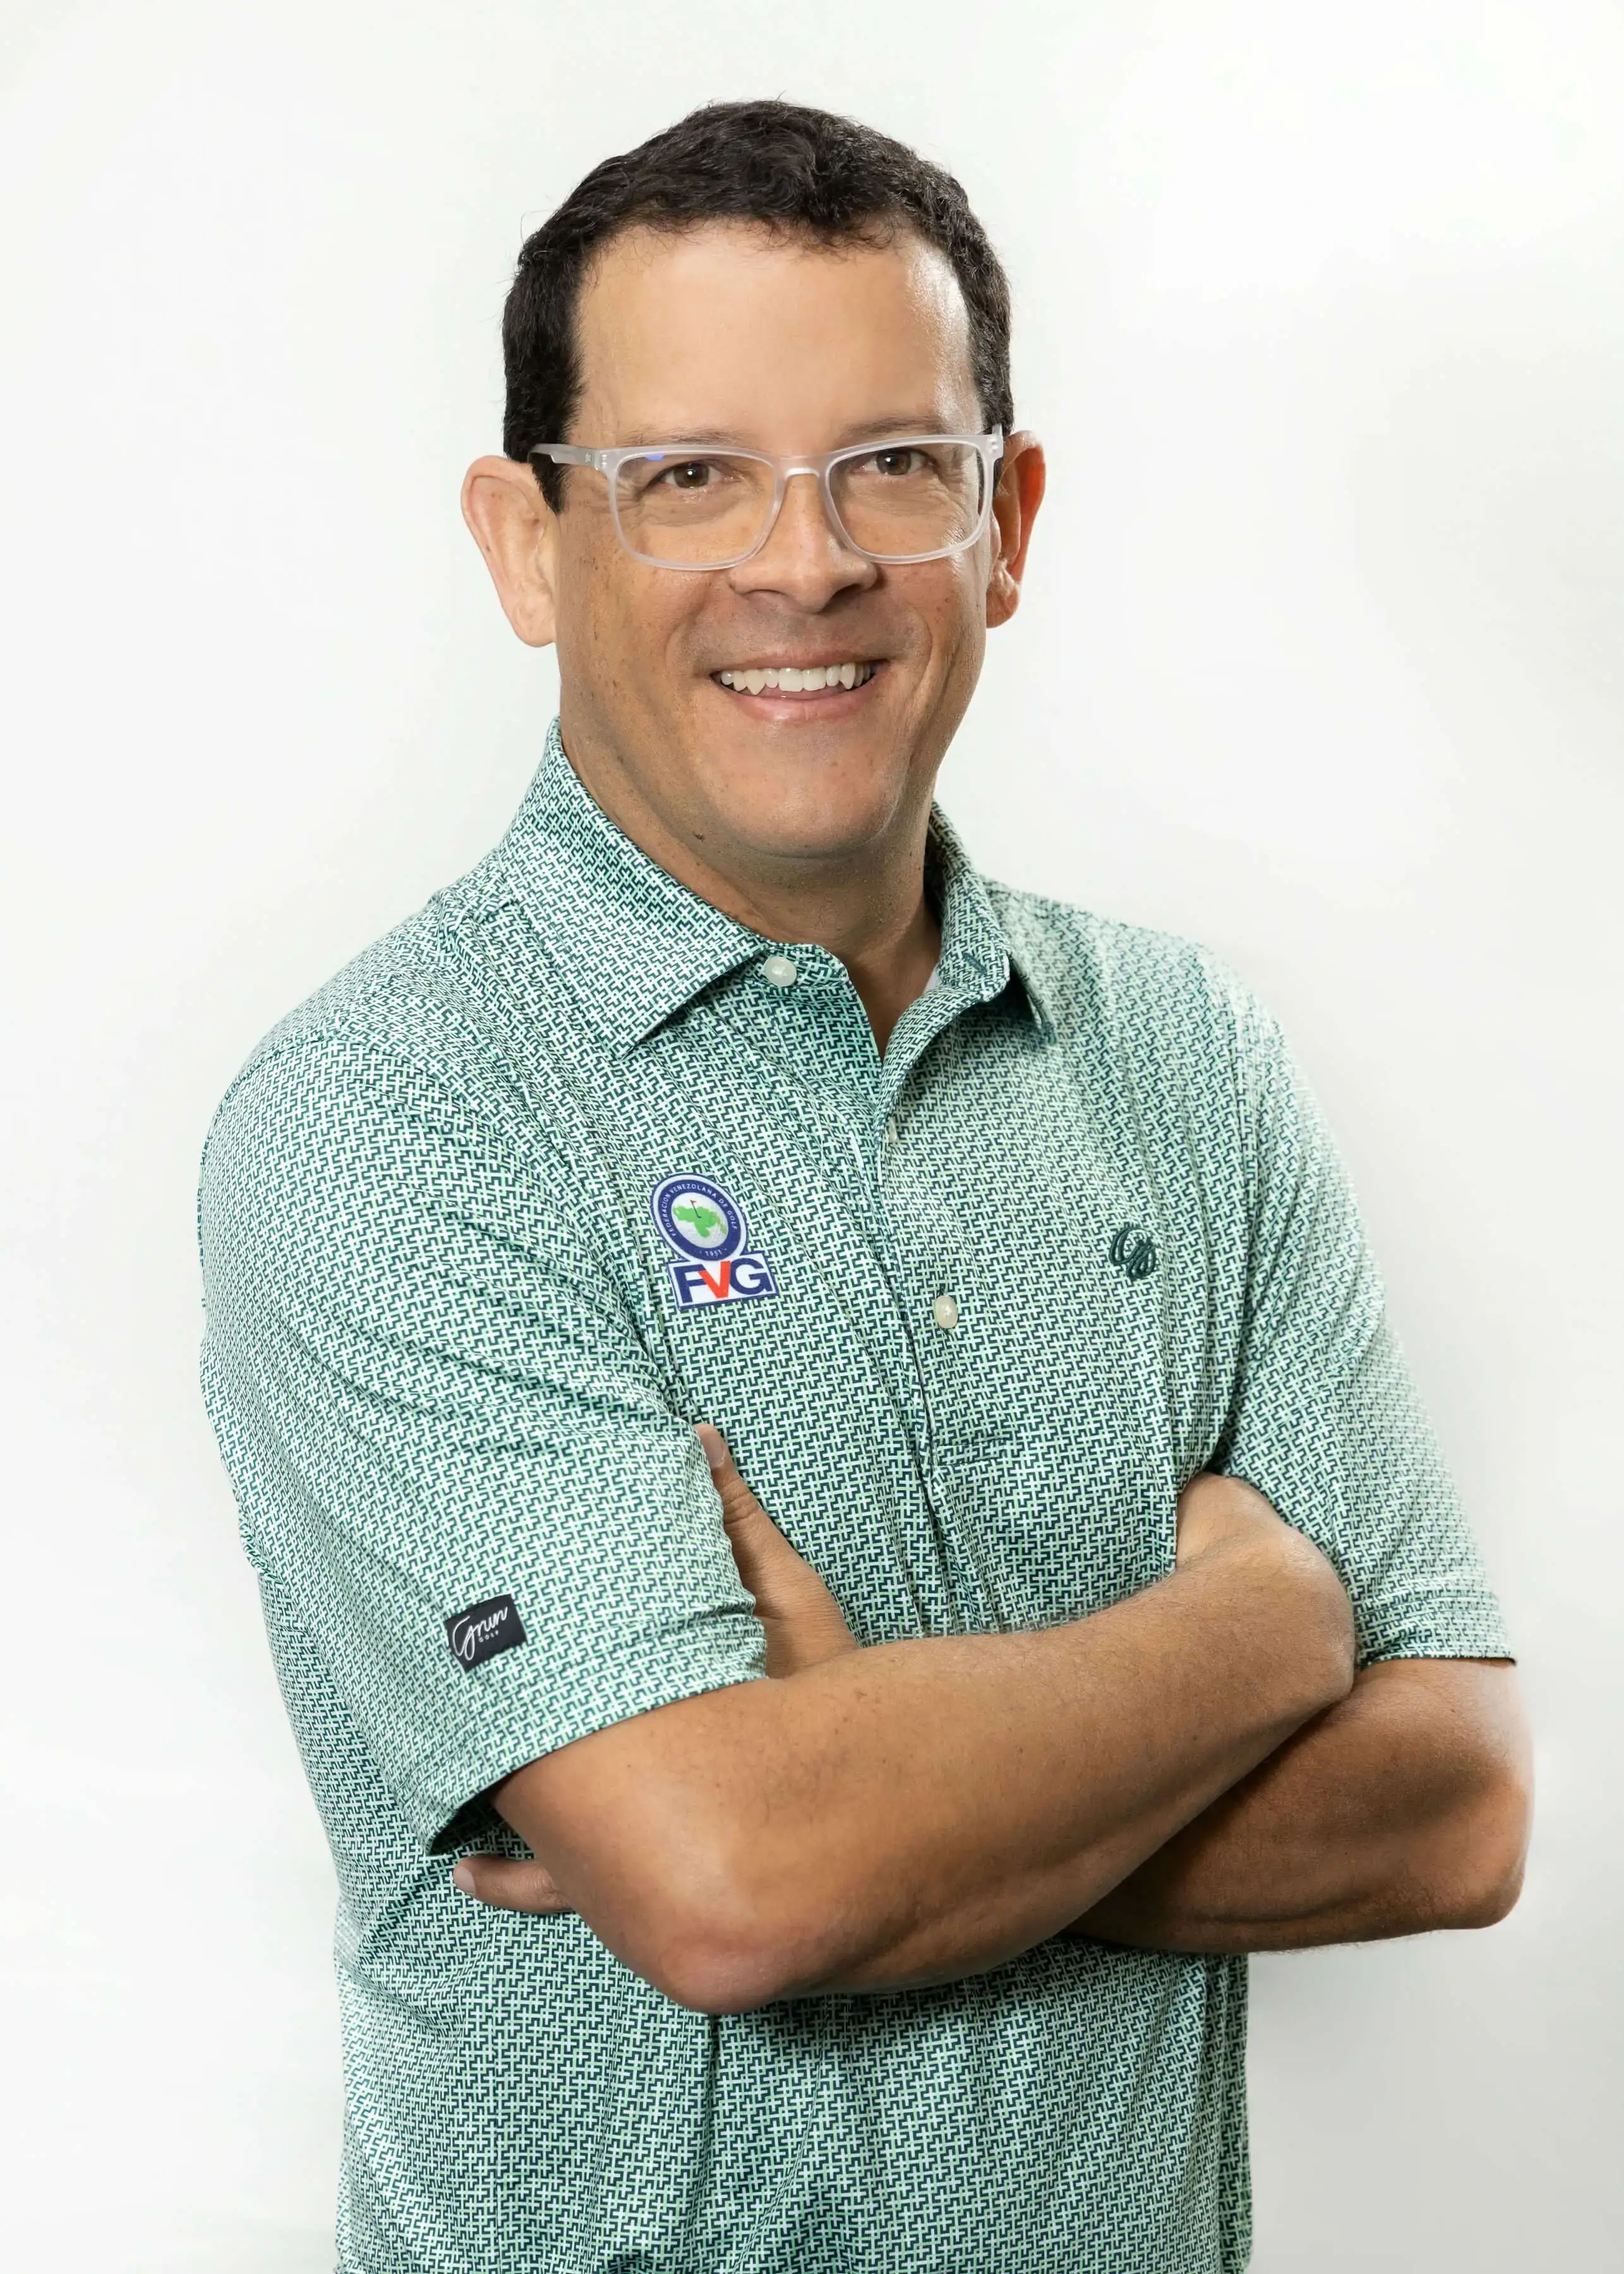 Carlos Rincón